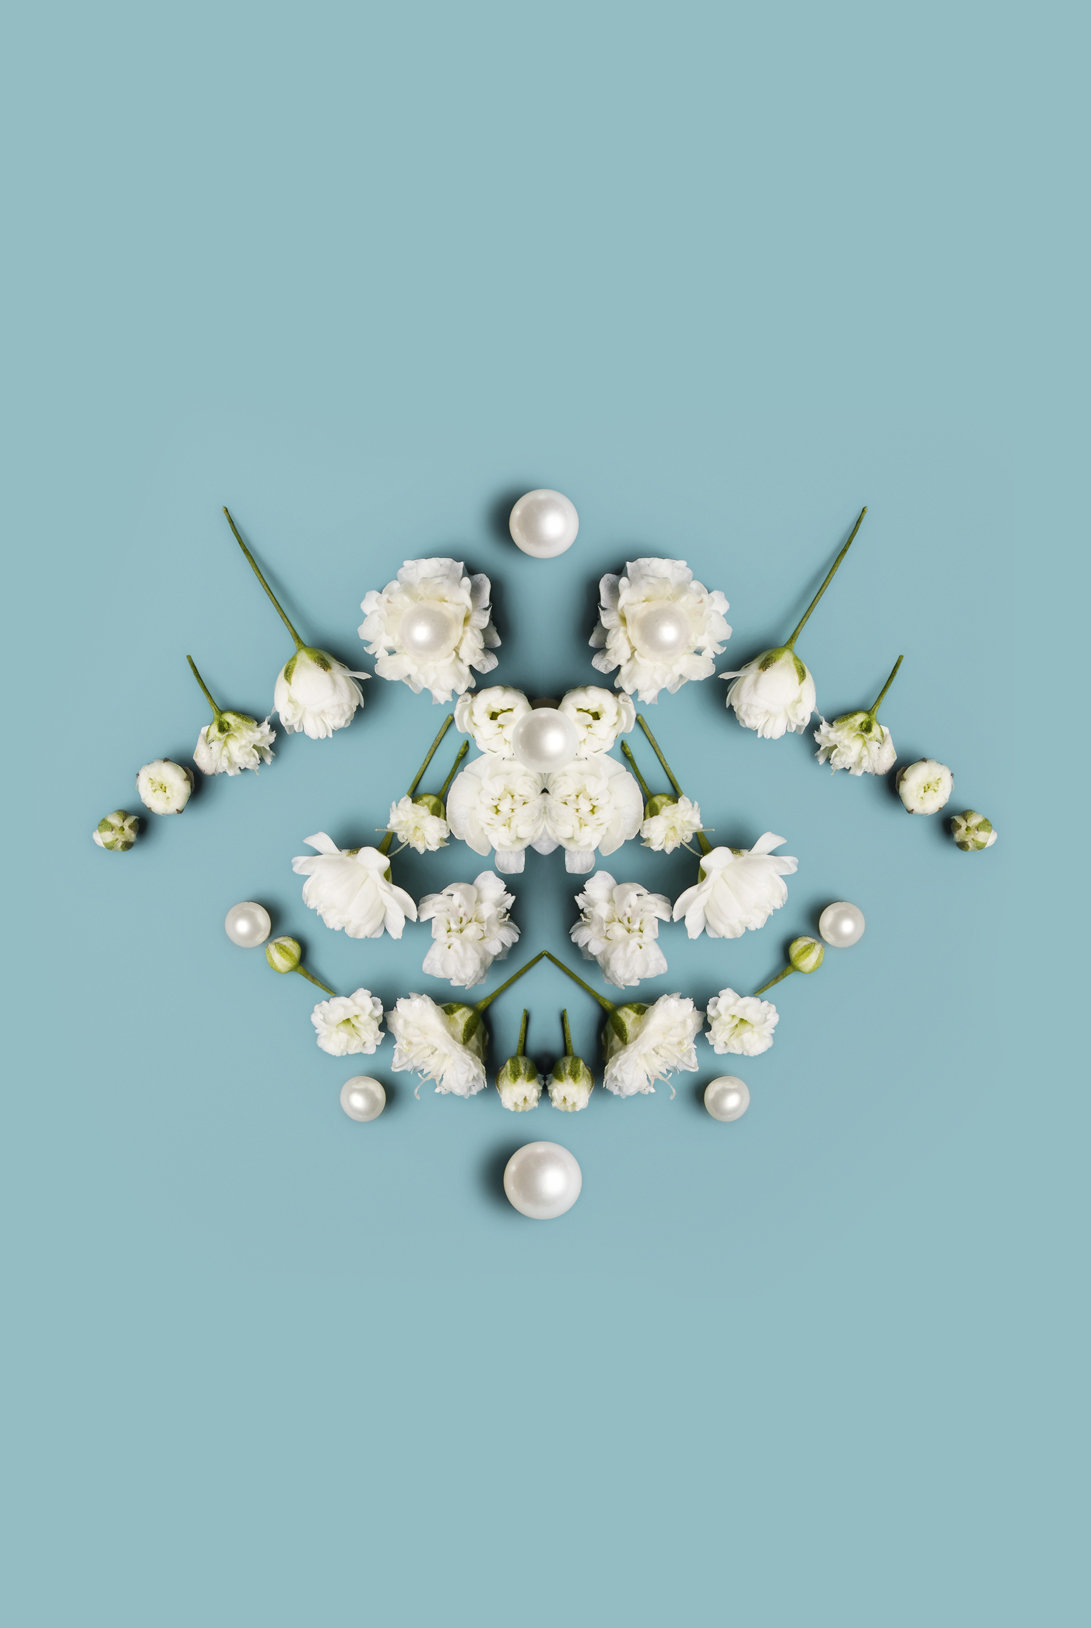 CARLA COSTE / Art Director & Image Maker Index Givenchy – Les Saisons